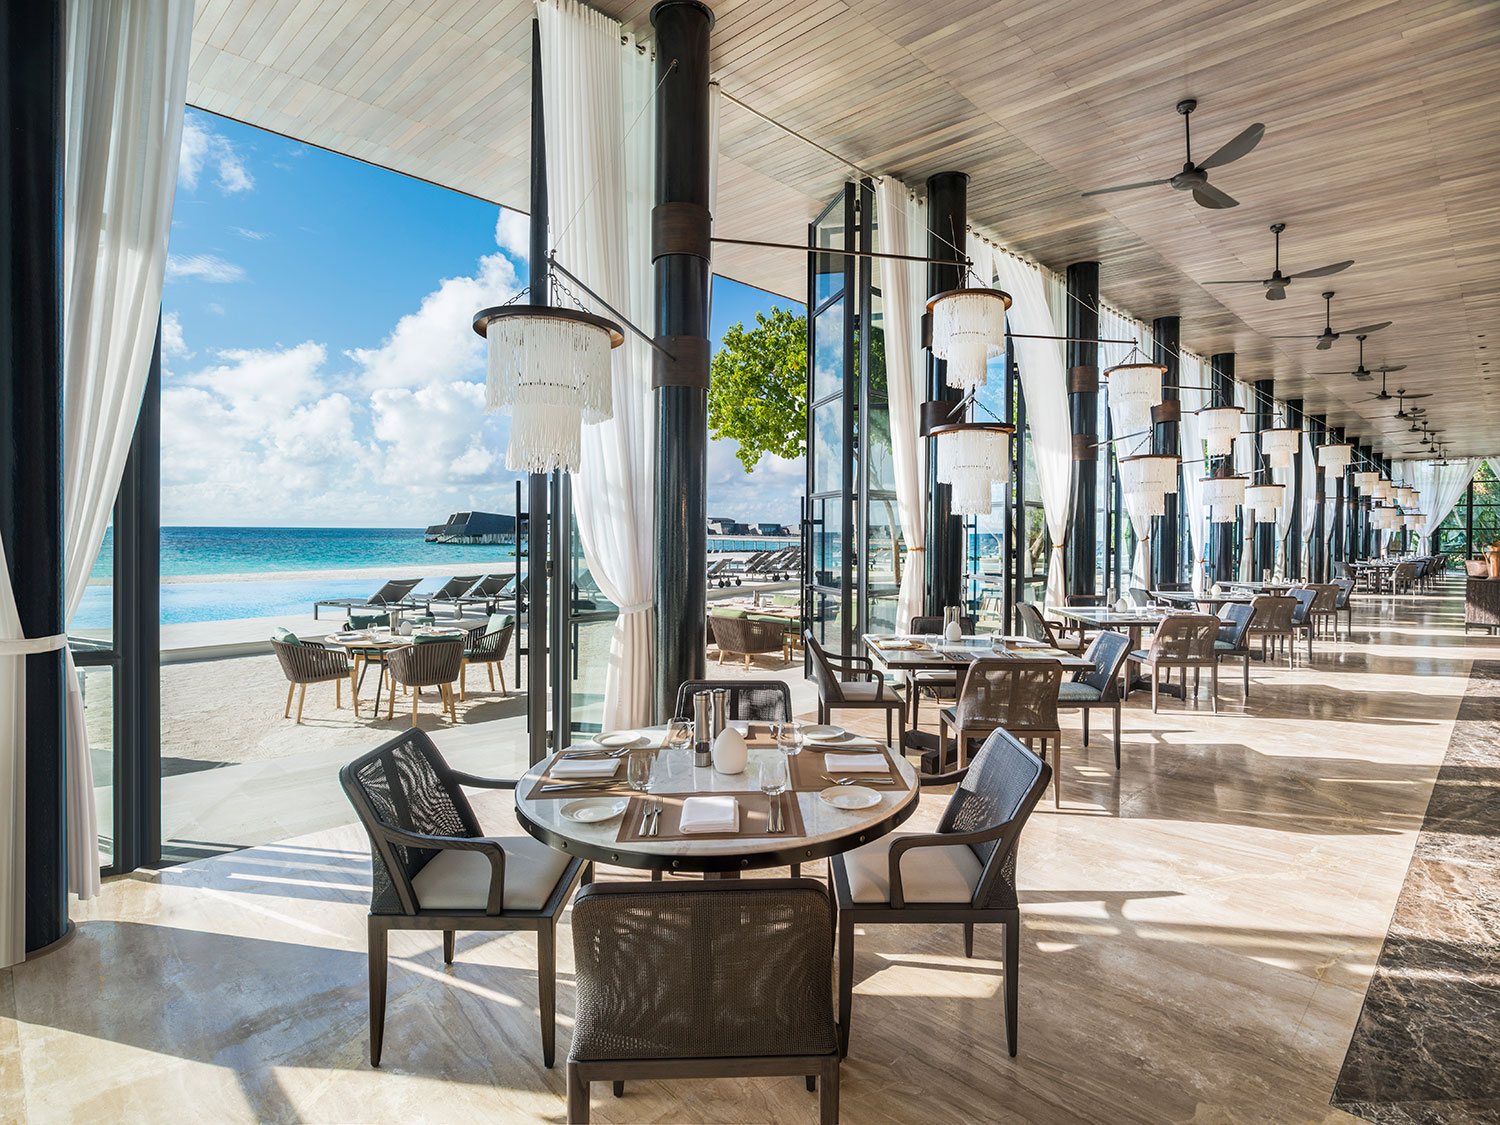 The interior of the Alba restaurant at The St. Regis Maldives Vommuli Resort.